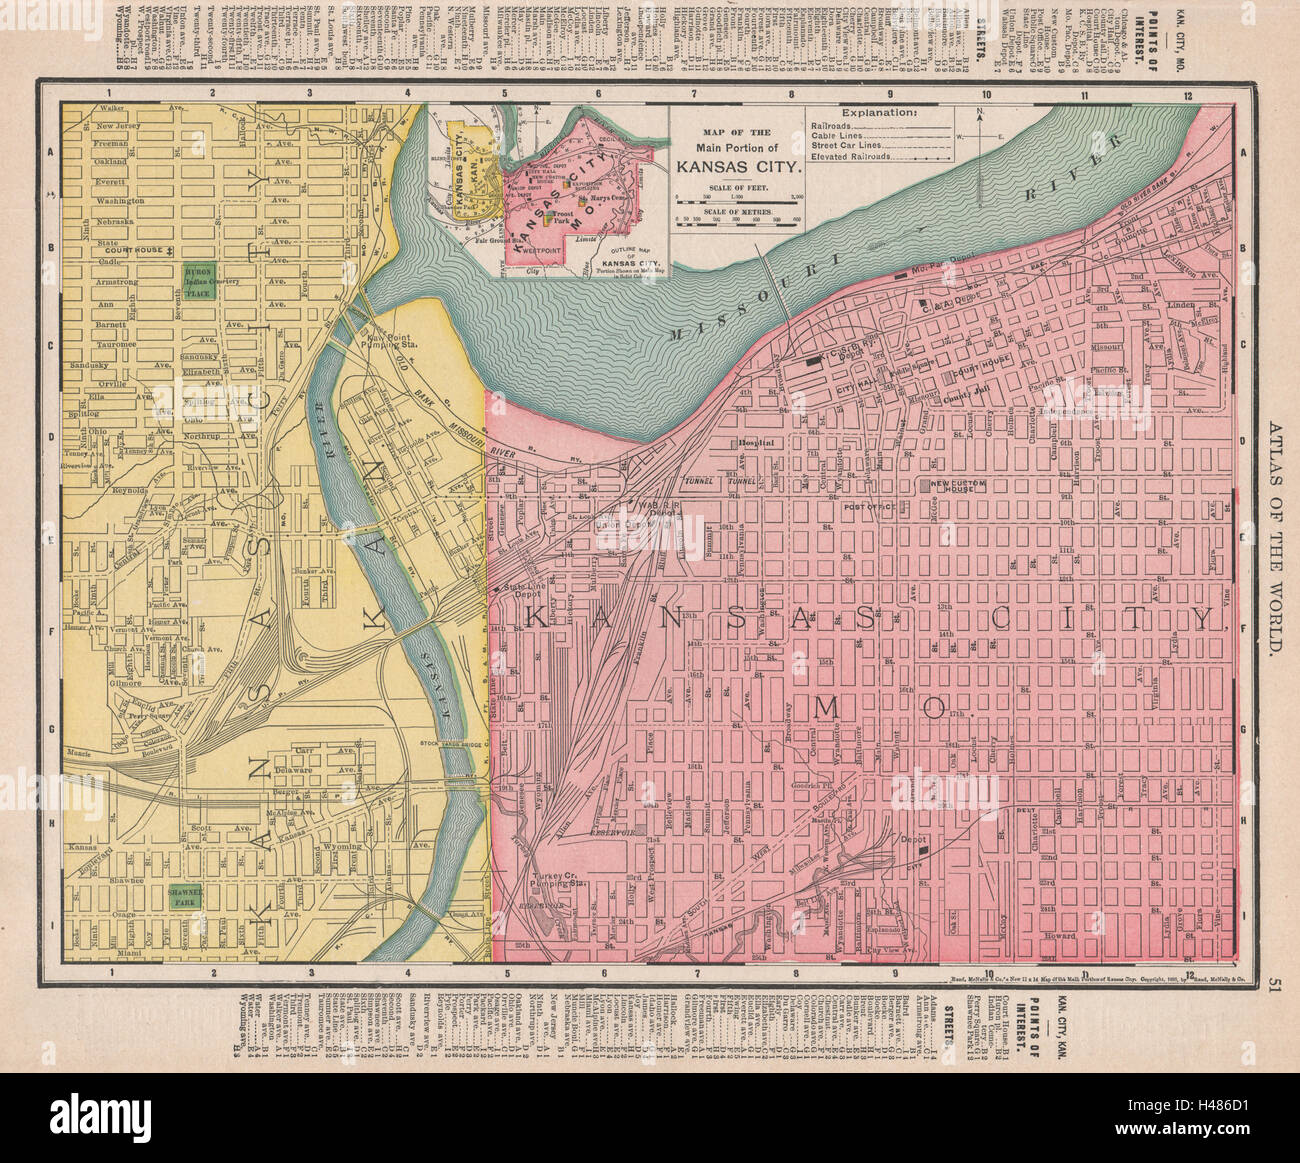 Kansas City town city map plan. Missouri/Kansas. RAND MCNALLY 1912 old Stock Photo